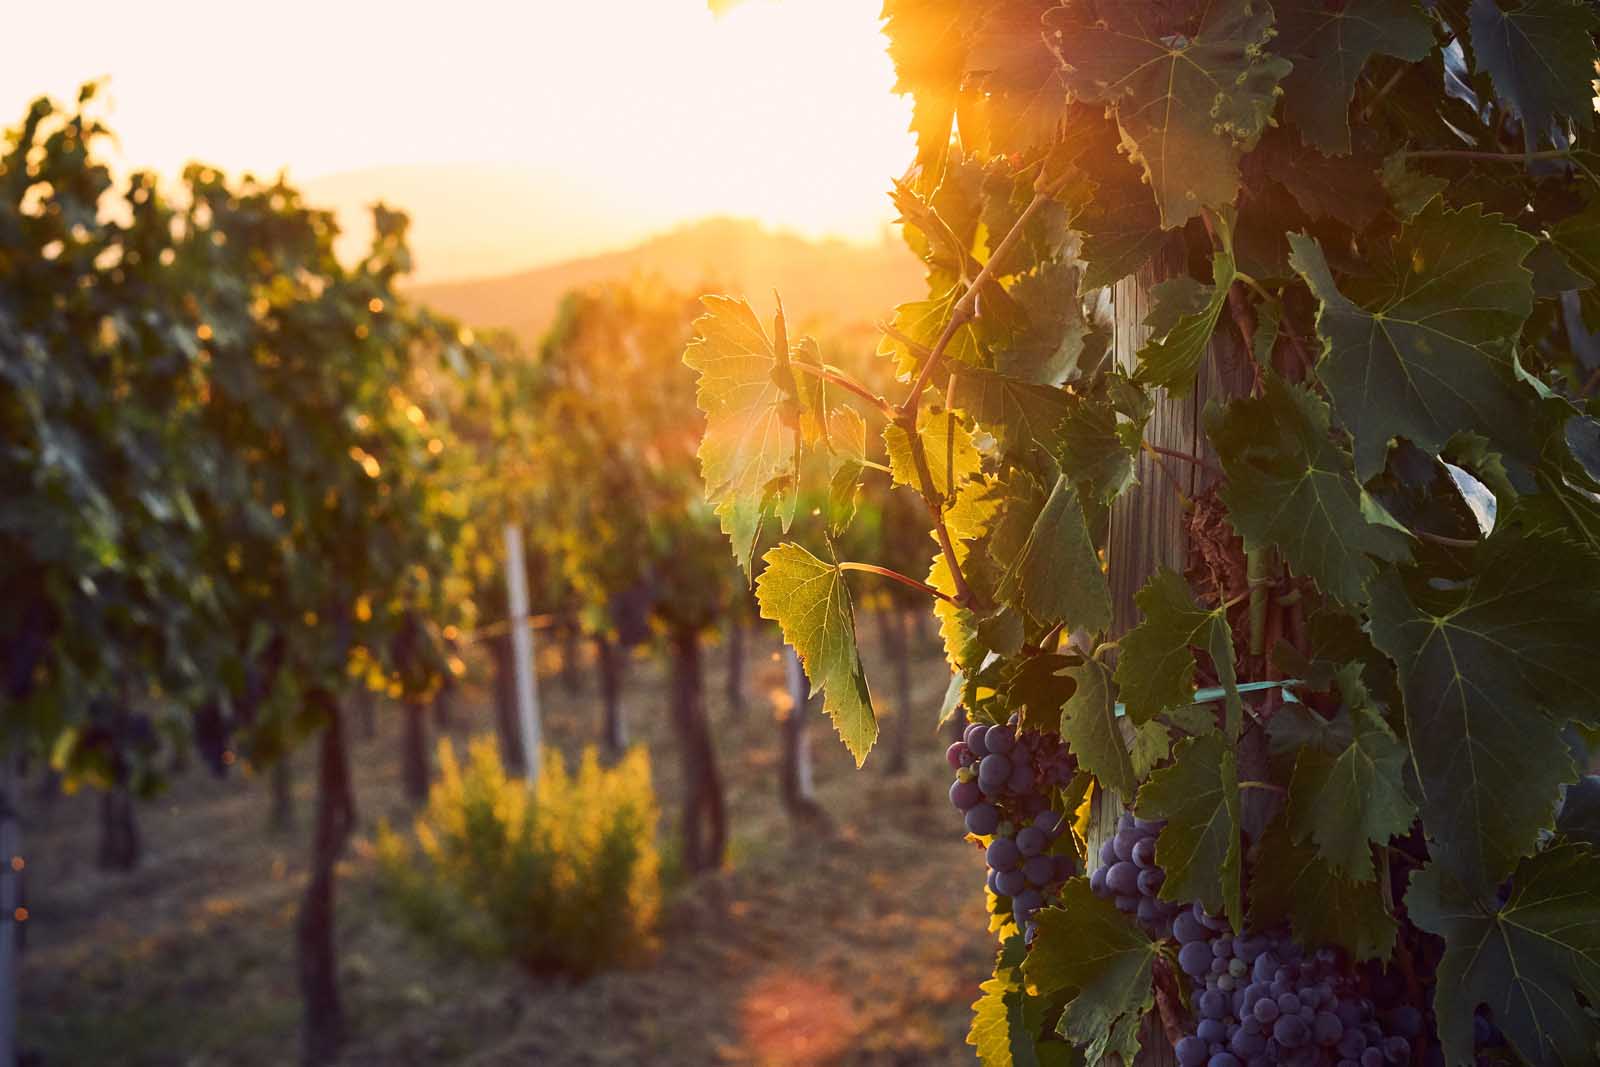 Verde Valley Wine Trail near Sedona Arizona